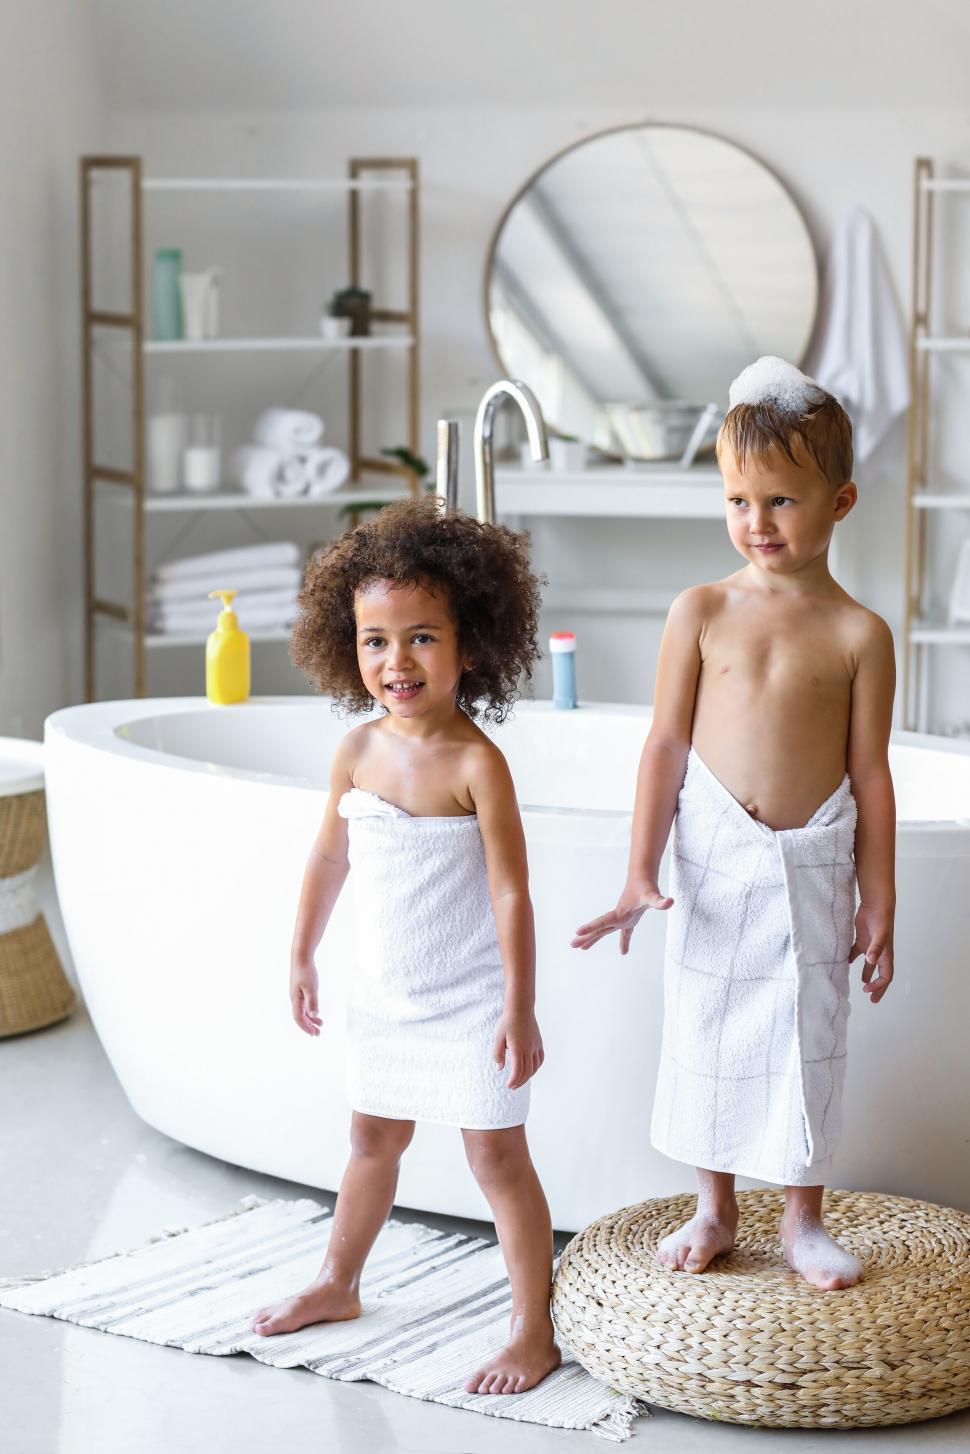 Free Image of Children in towels standing in bathroom 